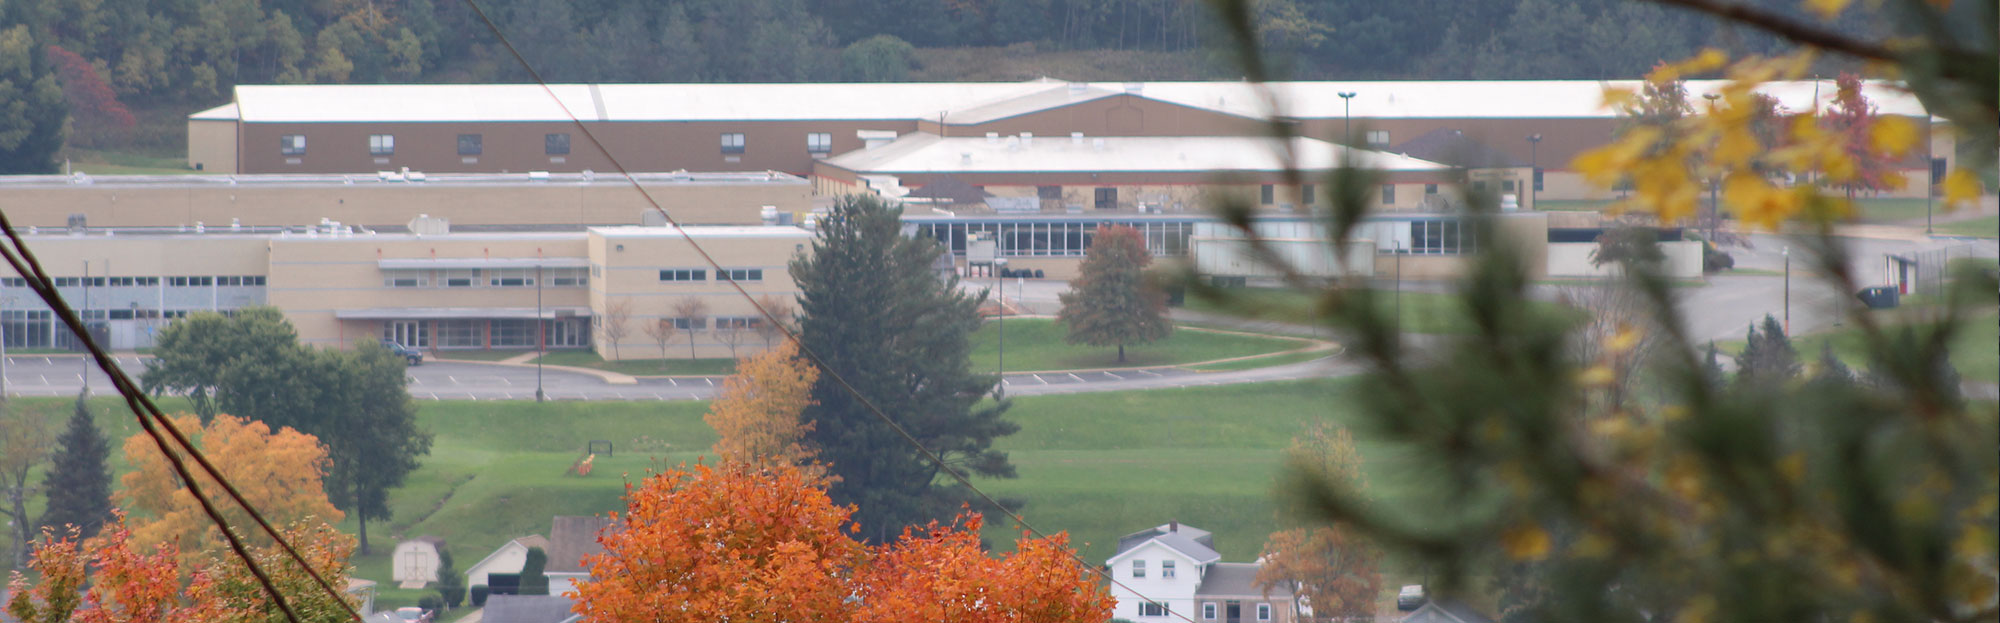 Aerial shot of school building